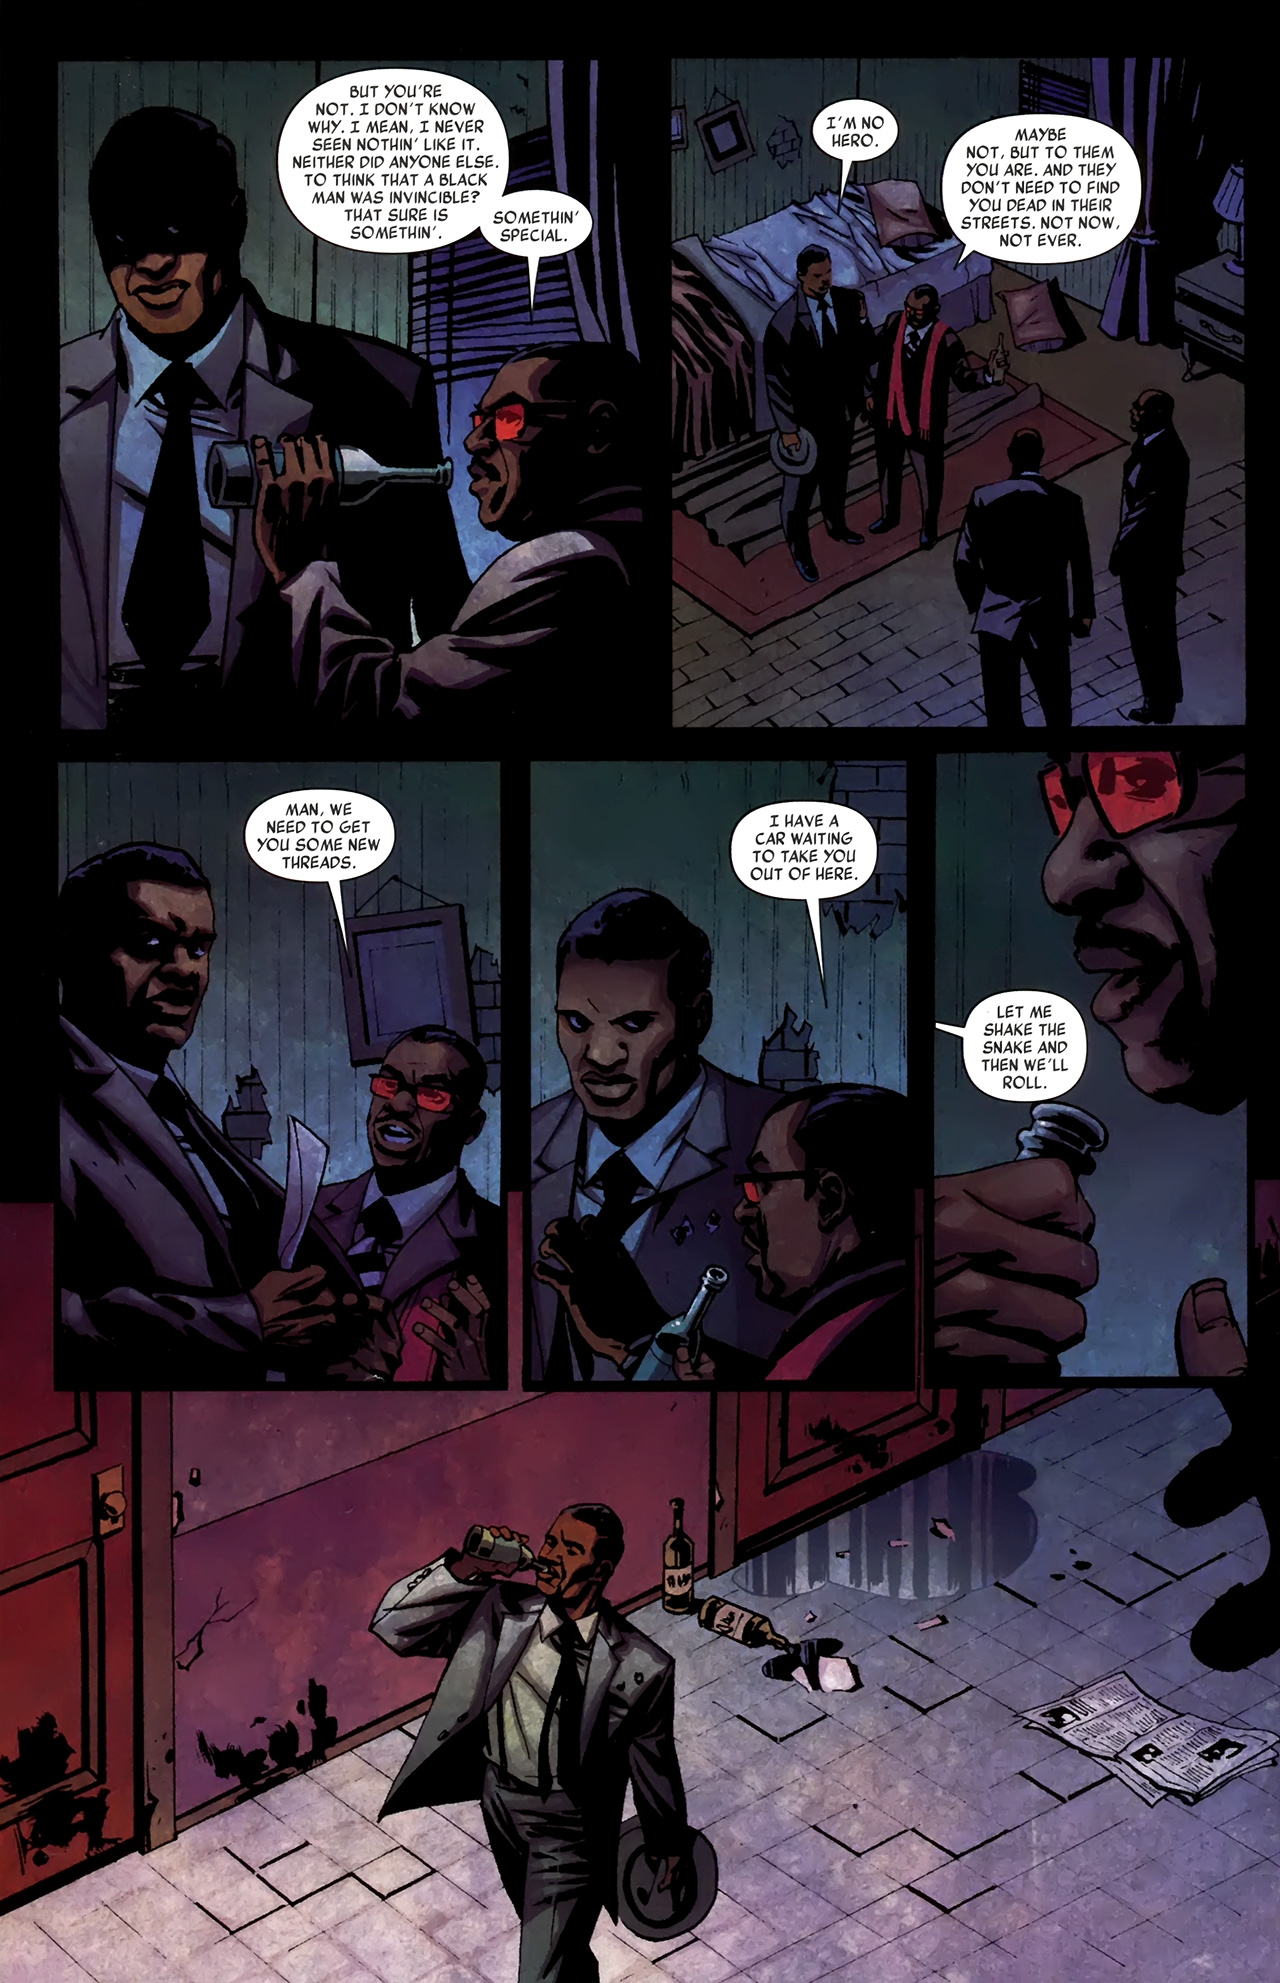 Luke Cage Noir #3 (of 4) - Moon Over Harlem, Part 3